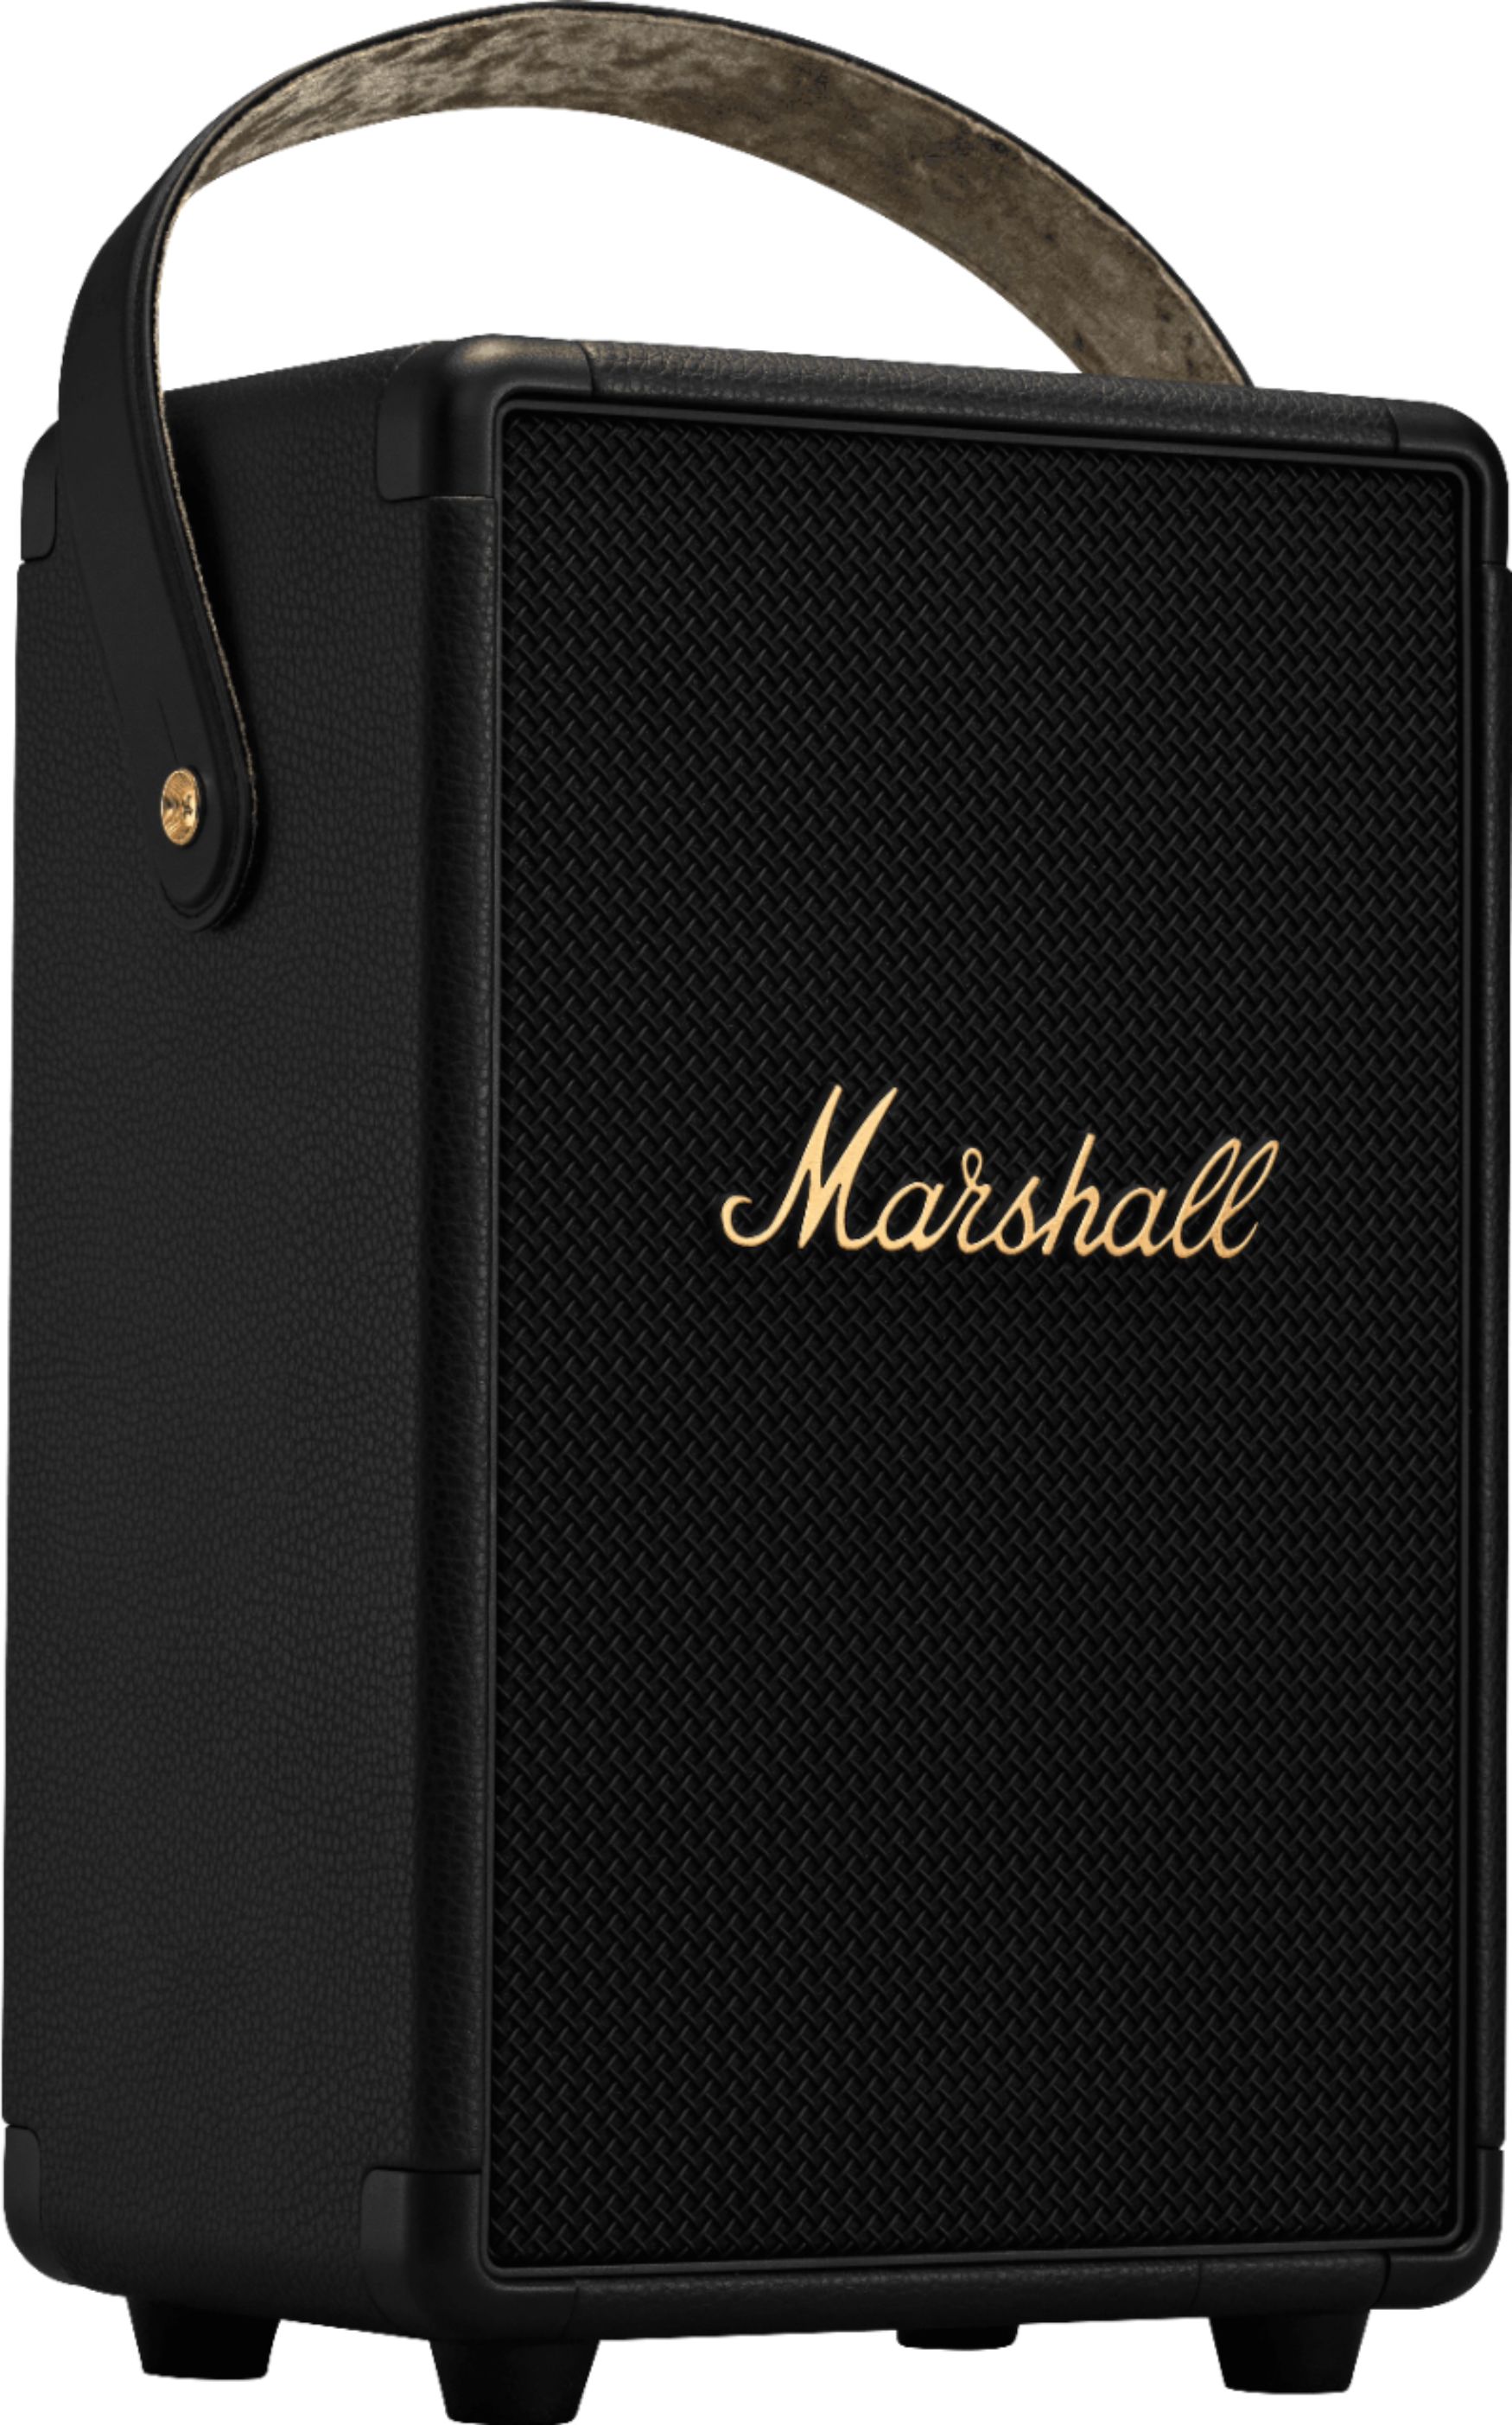 Marshall Tufton Portable Bluetooth Speaker Black/Brass 1006118 